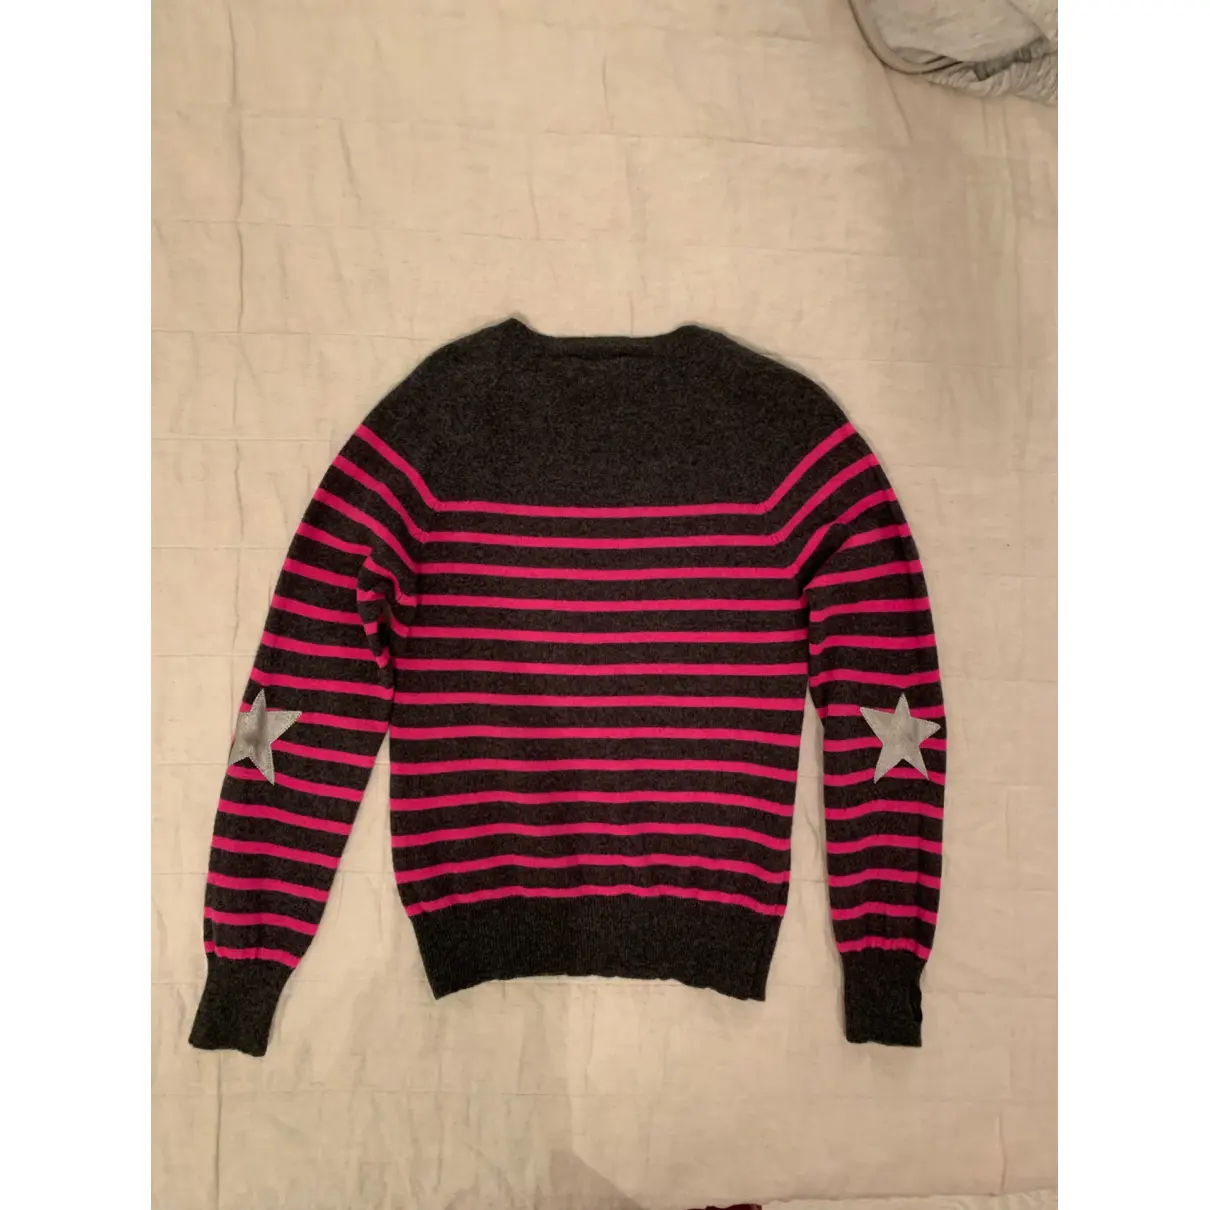 Buy Zadig & Voltaire Cashmere sweater online